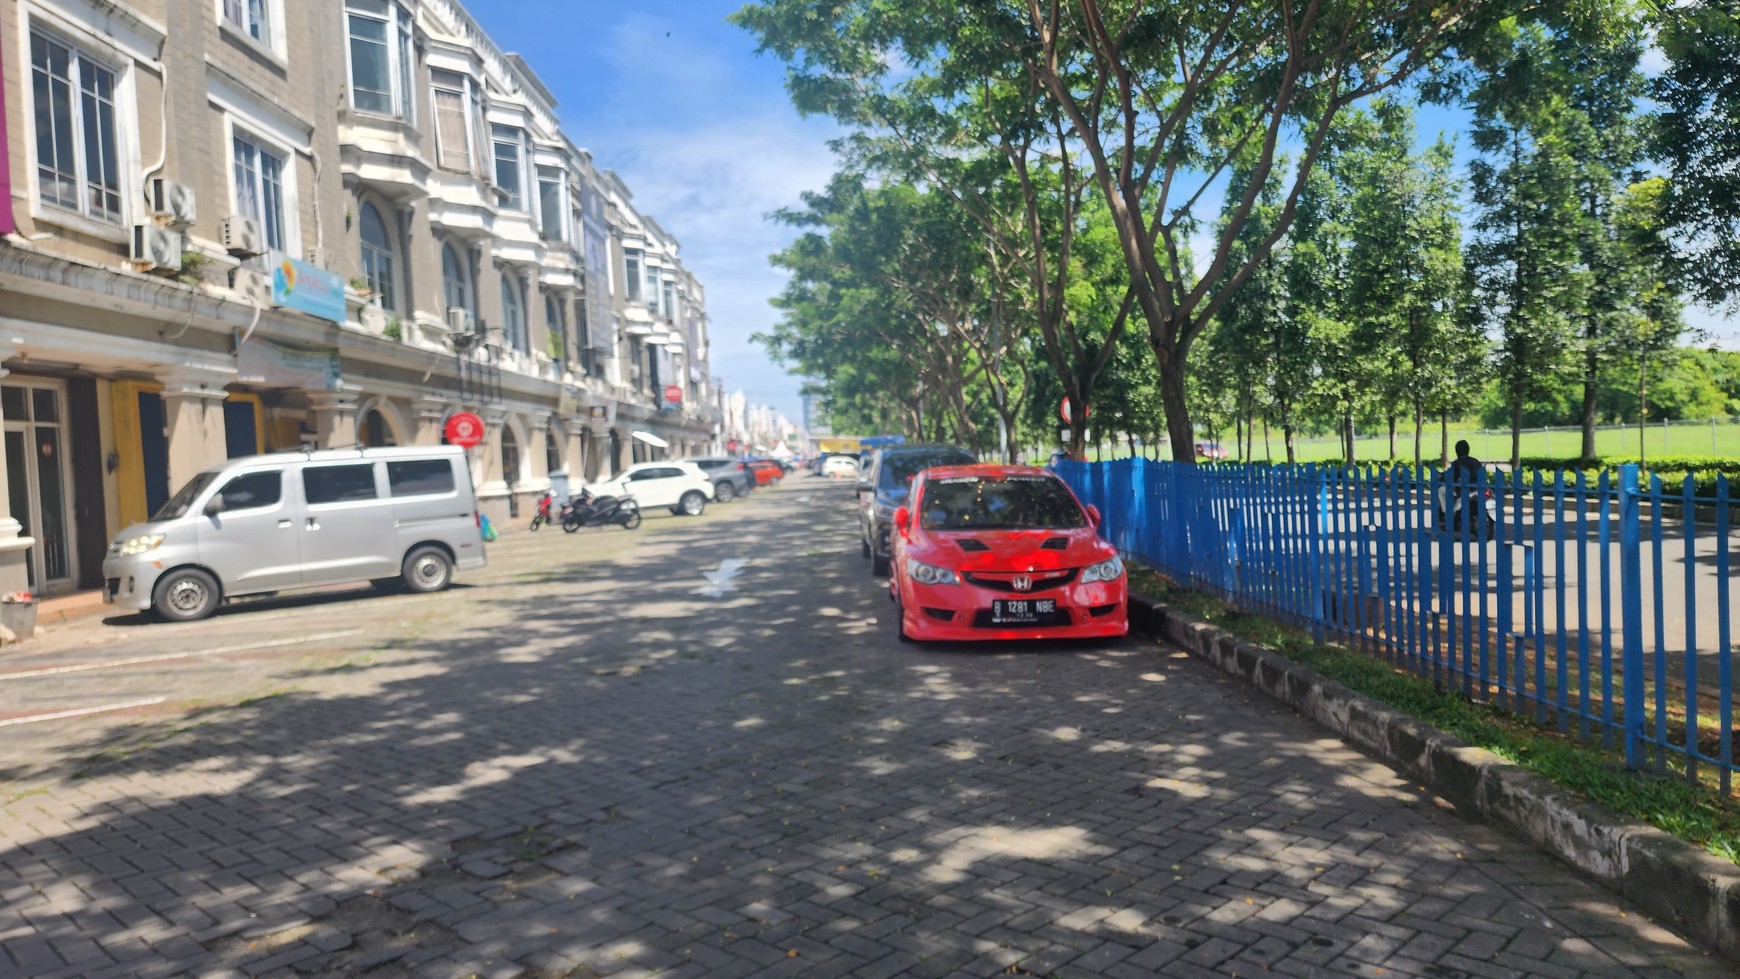 Disewakan Ruko Tematik Pinggir Jalan @ Gading Serpong Tangerang